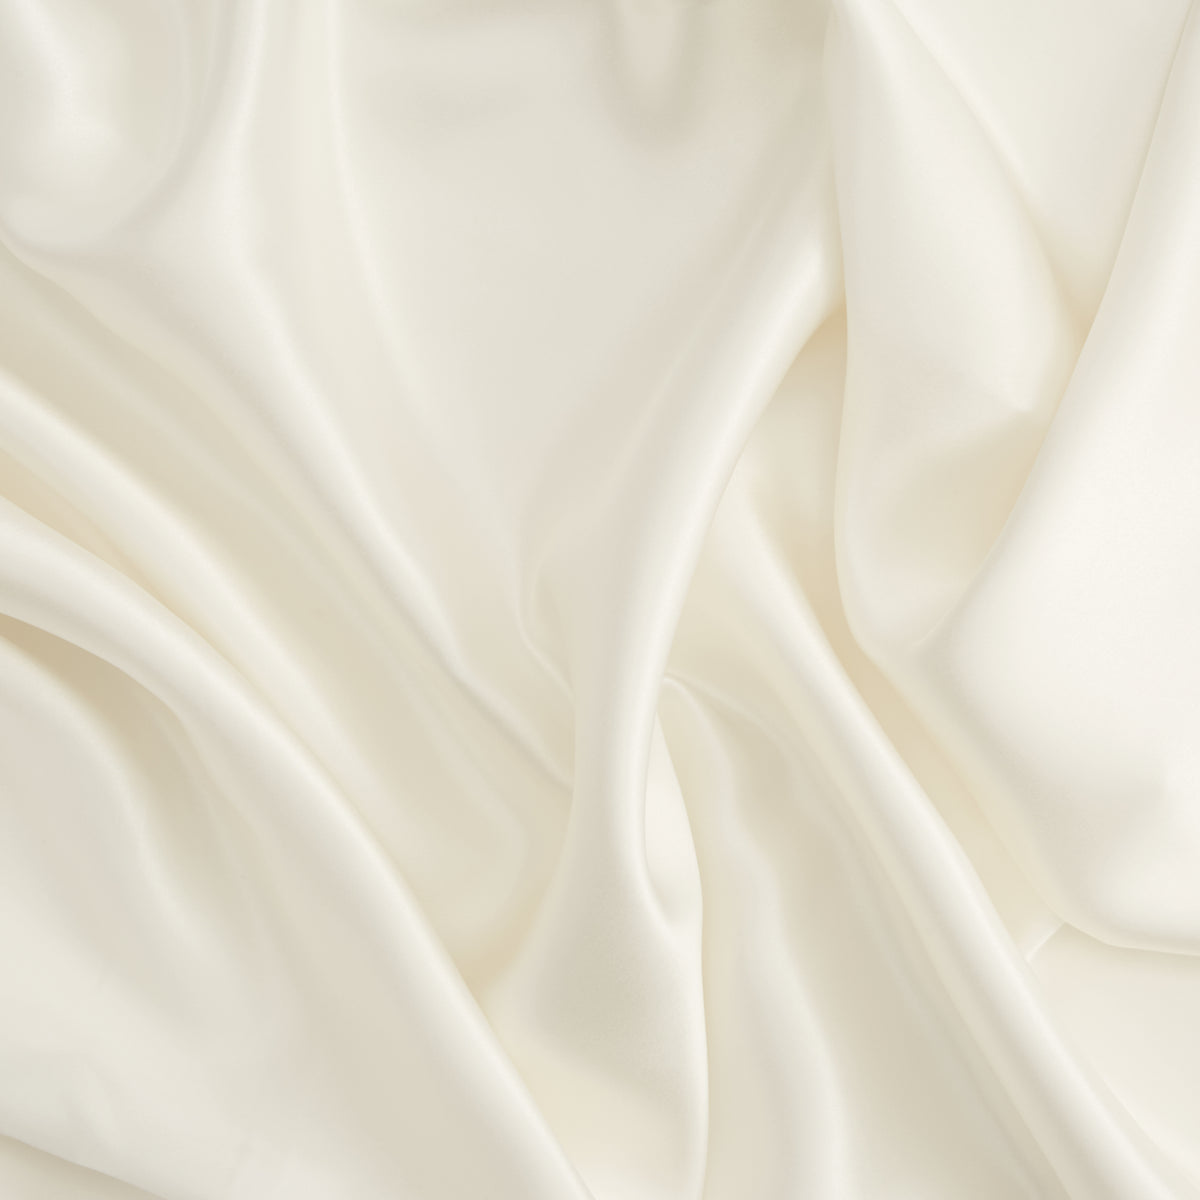 King Size Natural White Silk Pillowcase